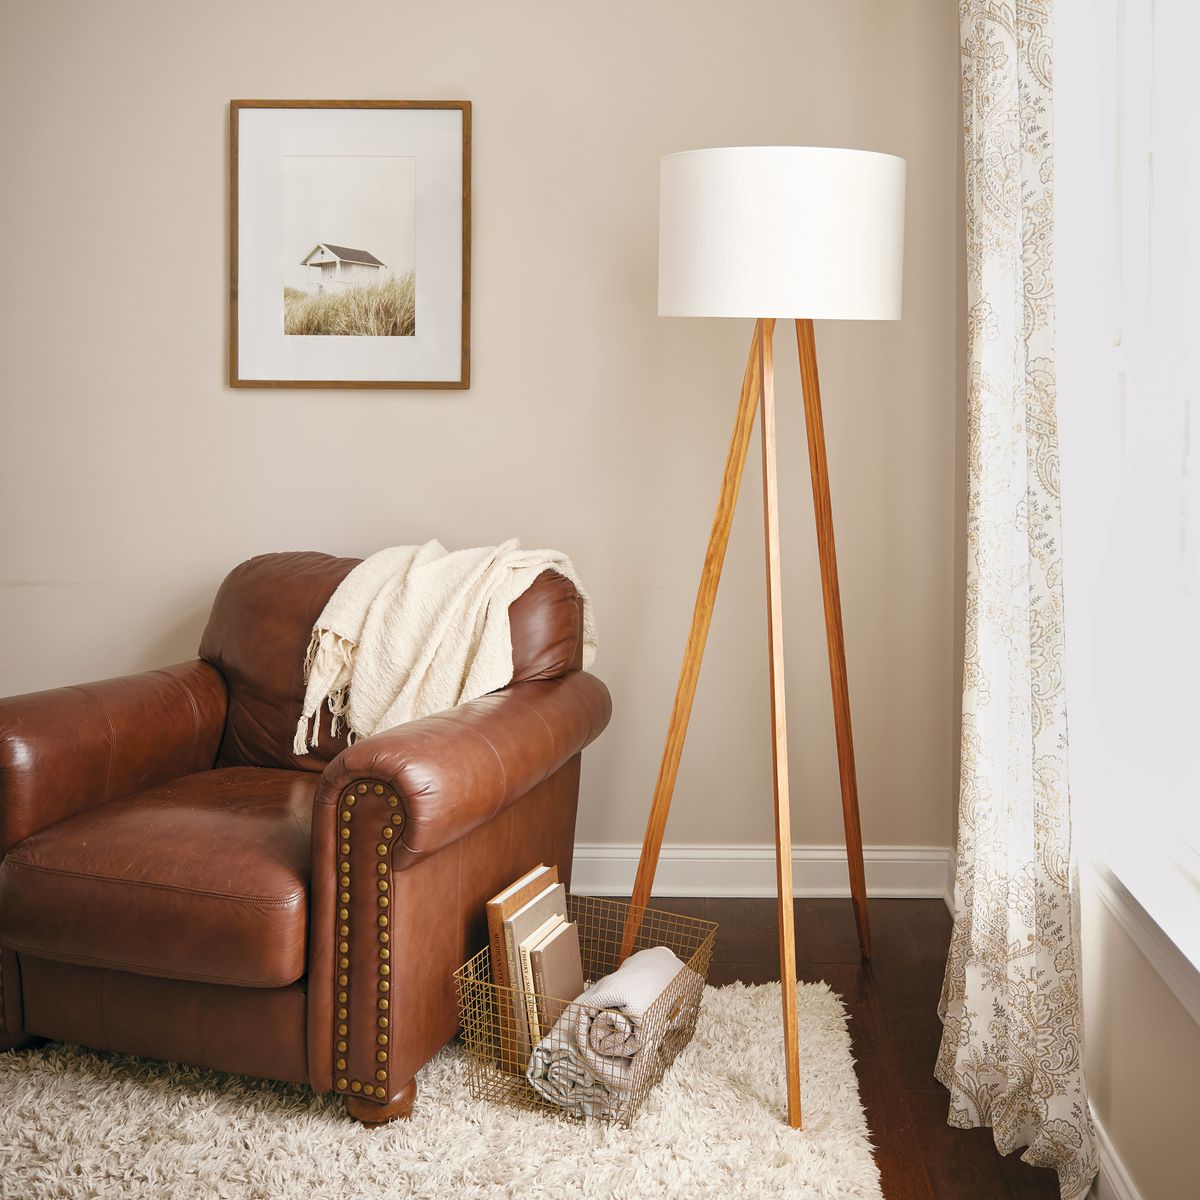 Tripod lamp in livingroom 